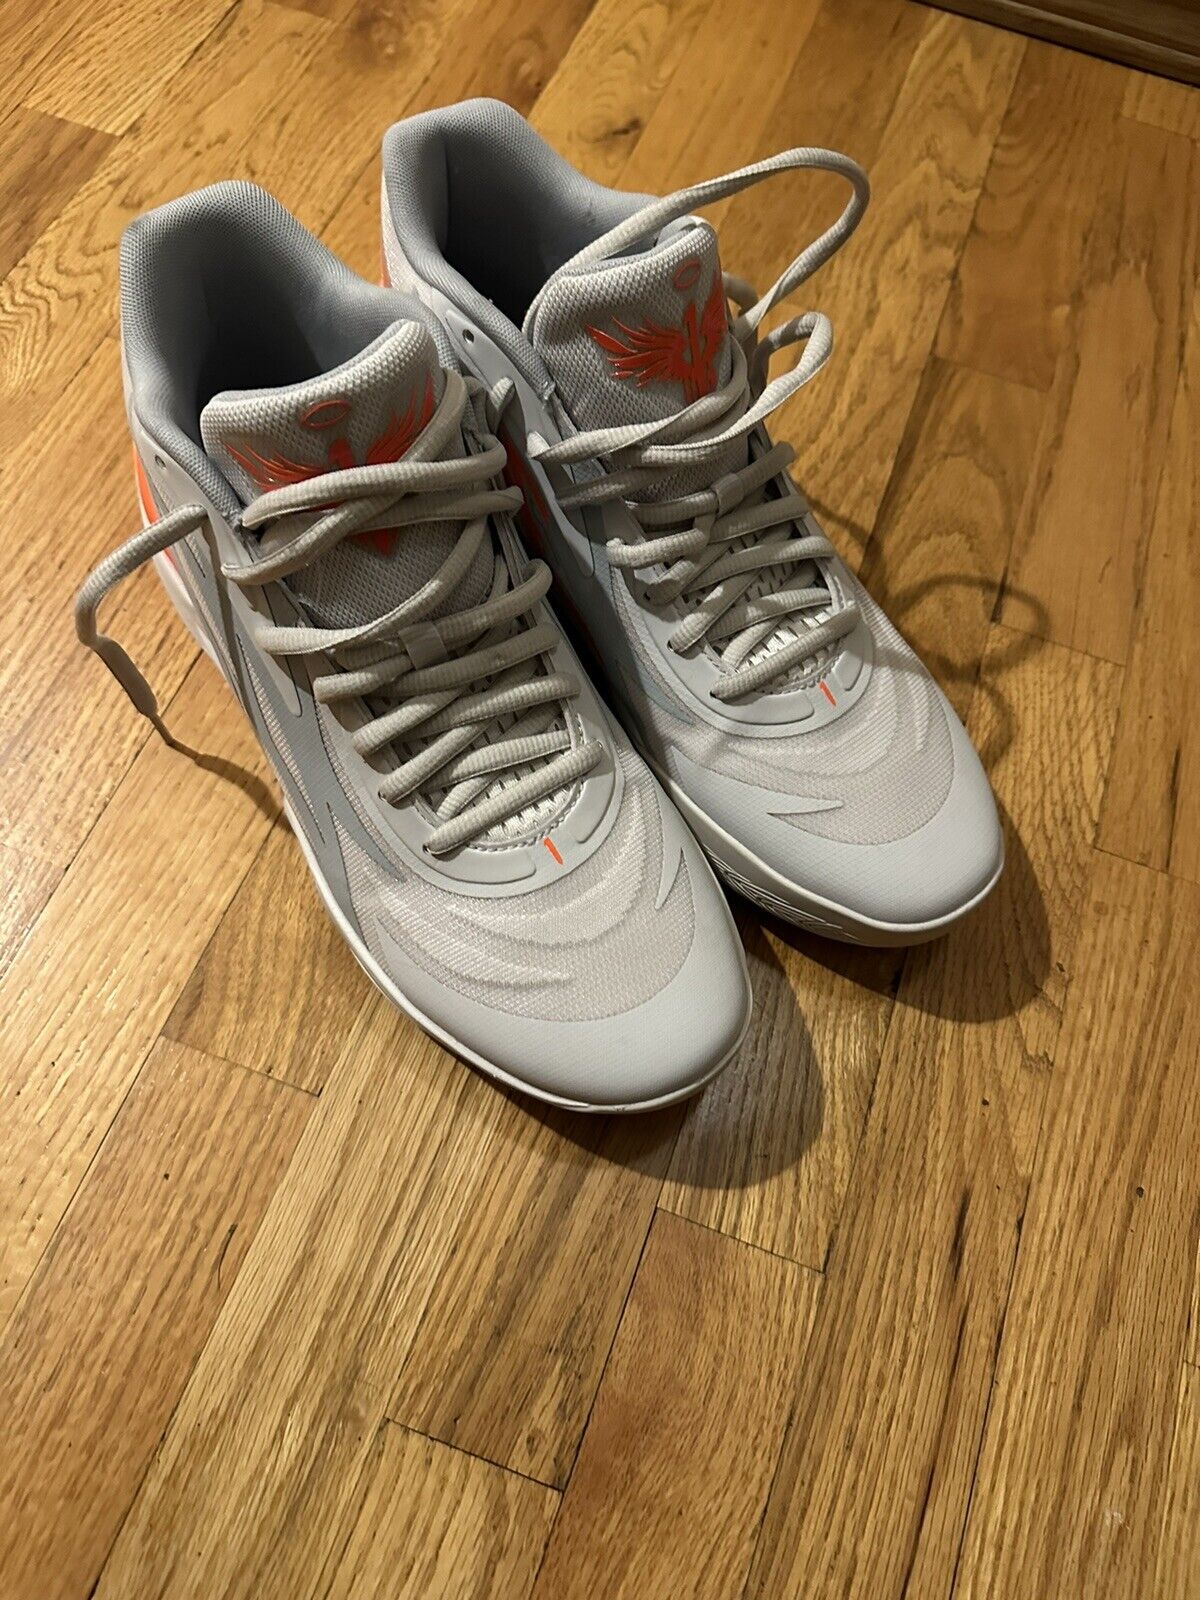 puma basketball shoes - image 1